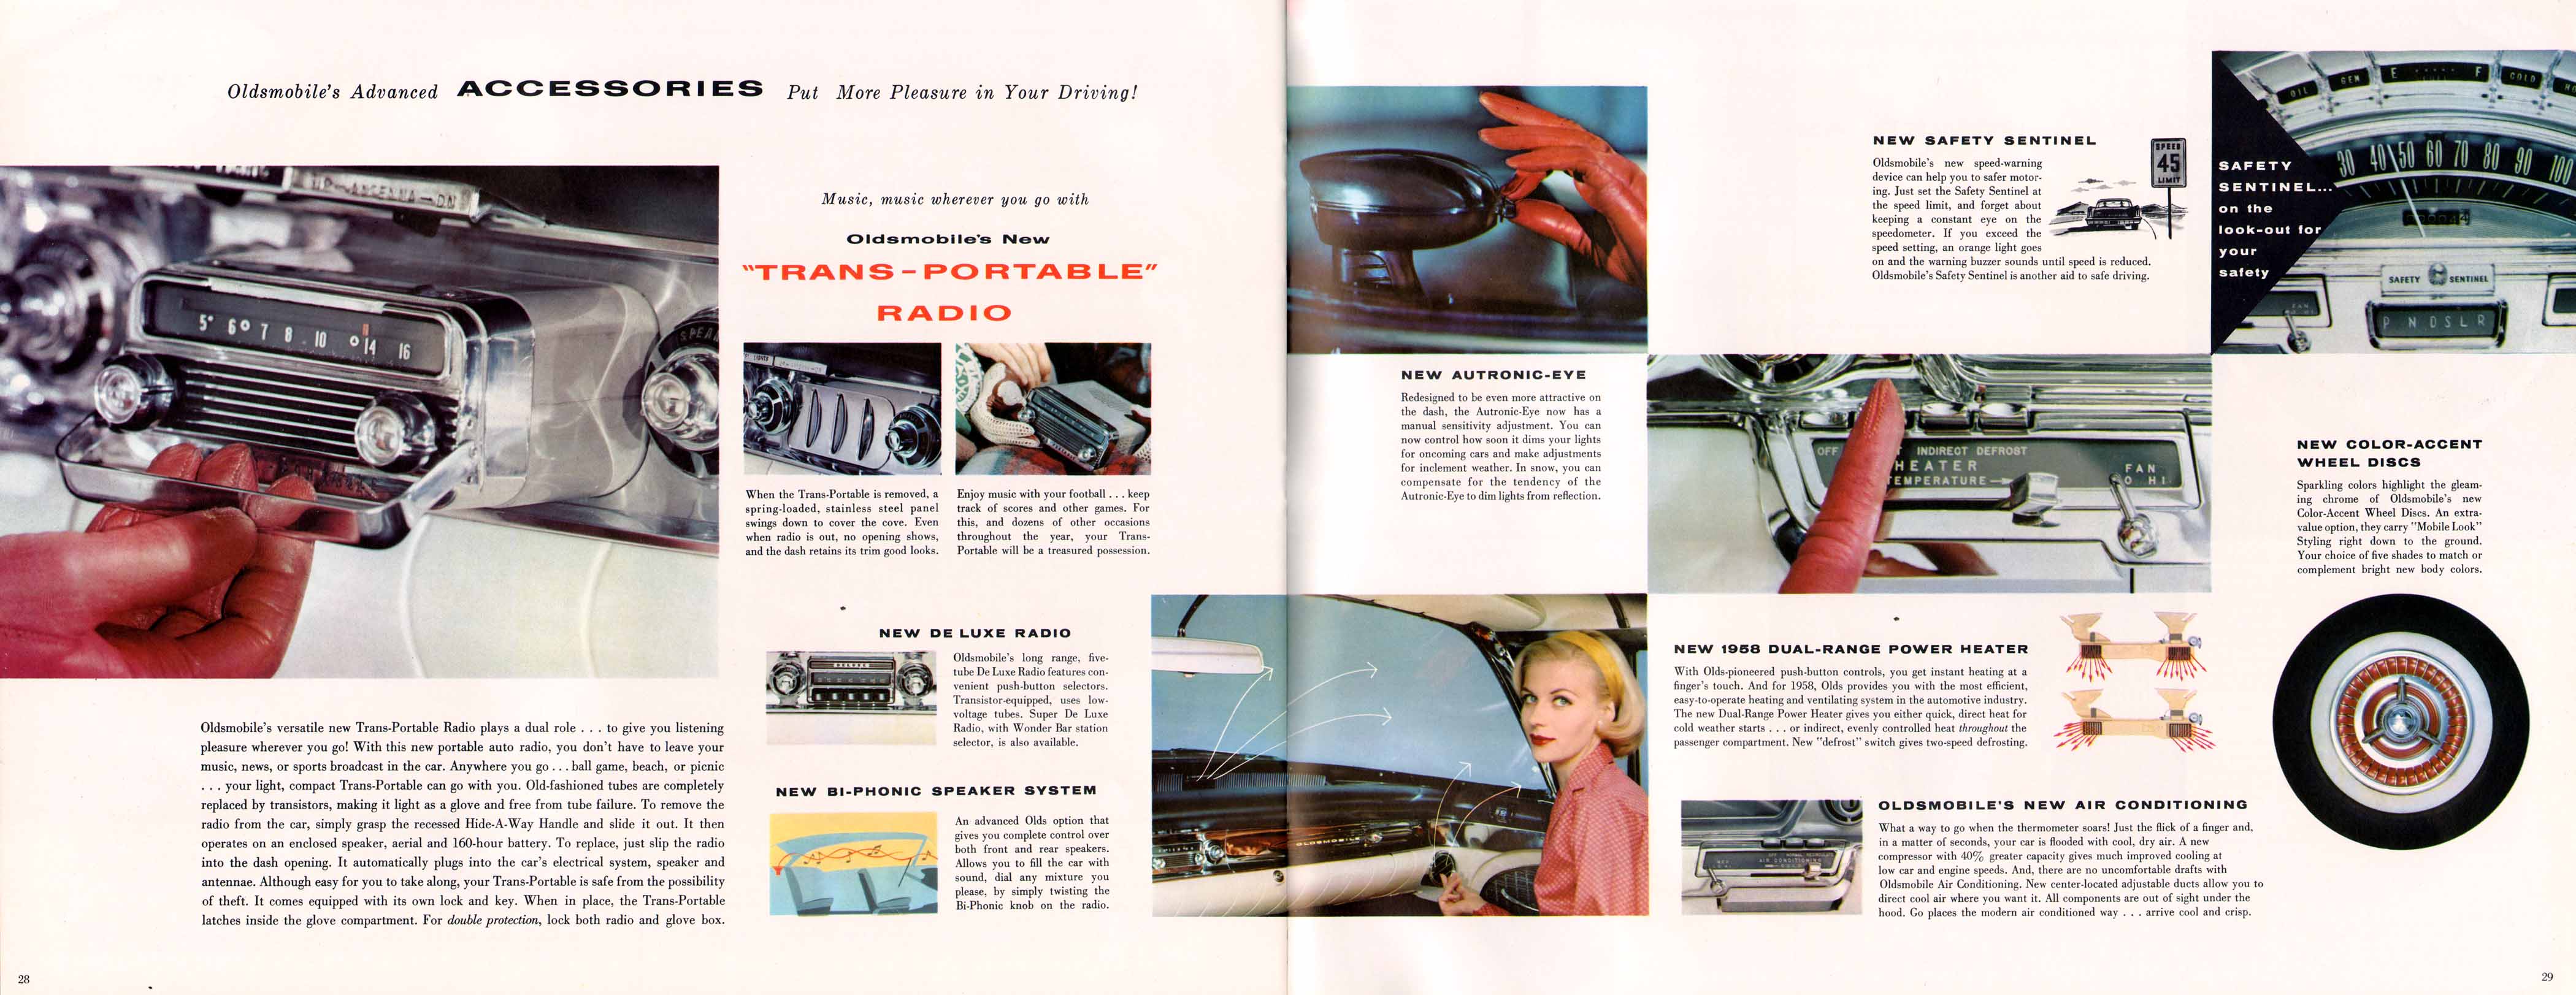 1958 Oldsmobile Motor Cars Brochure Page 12